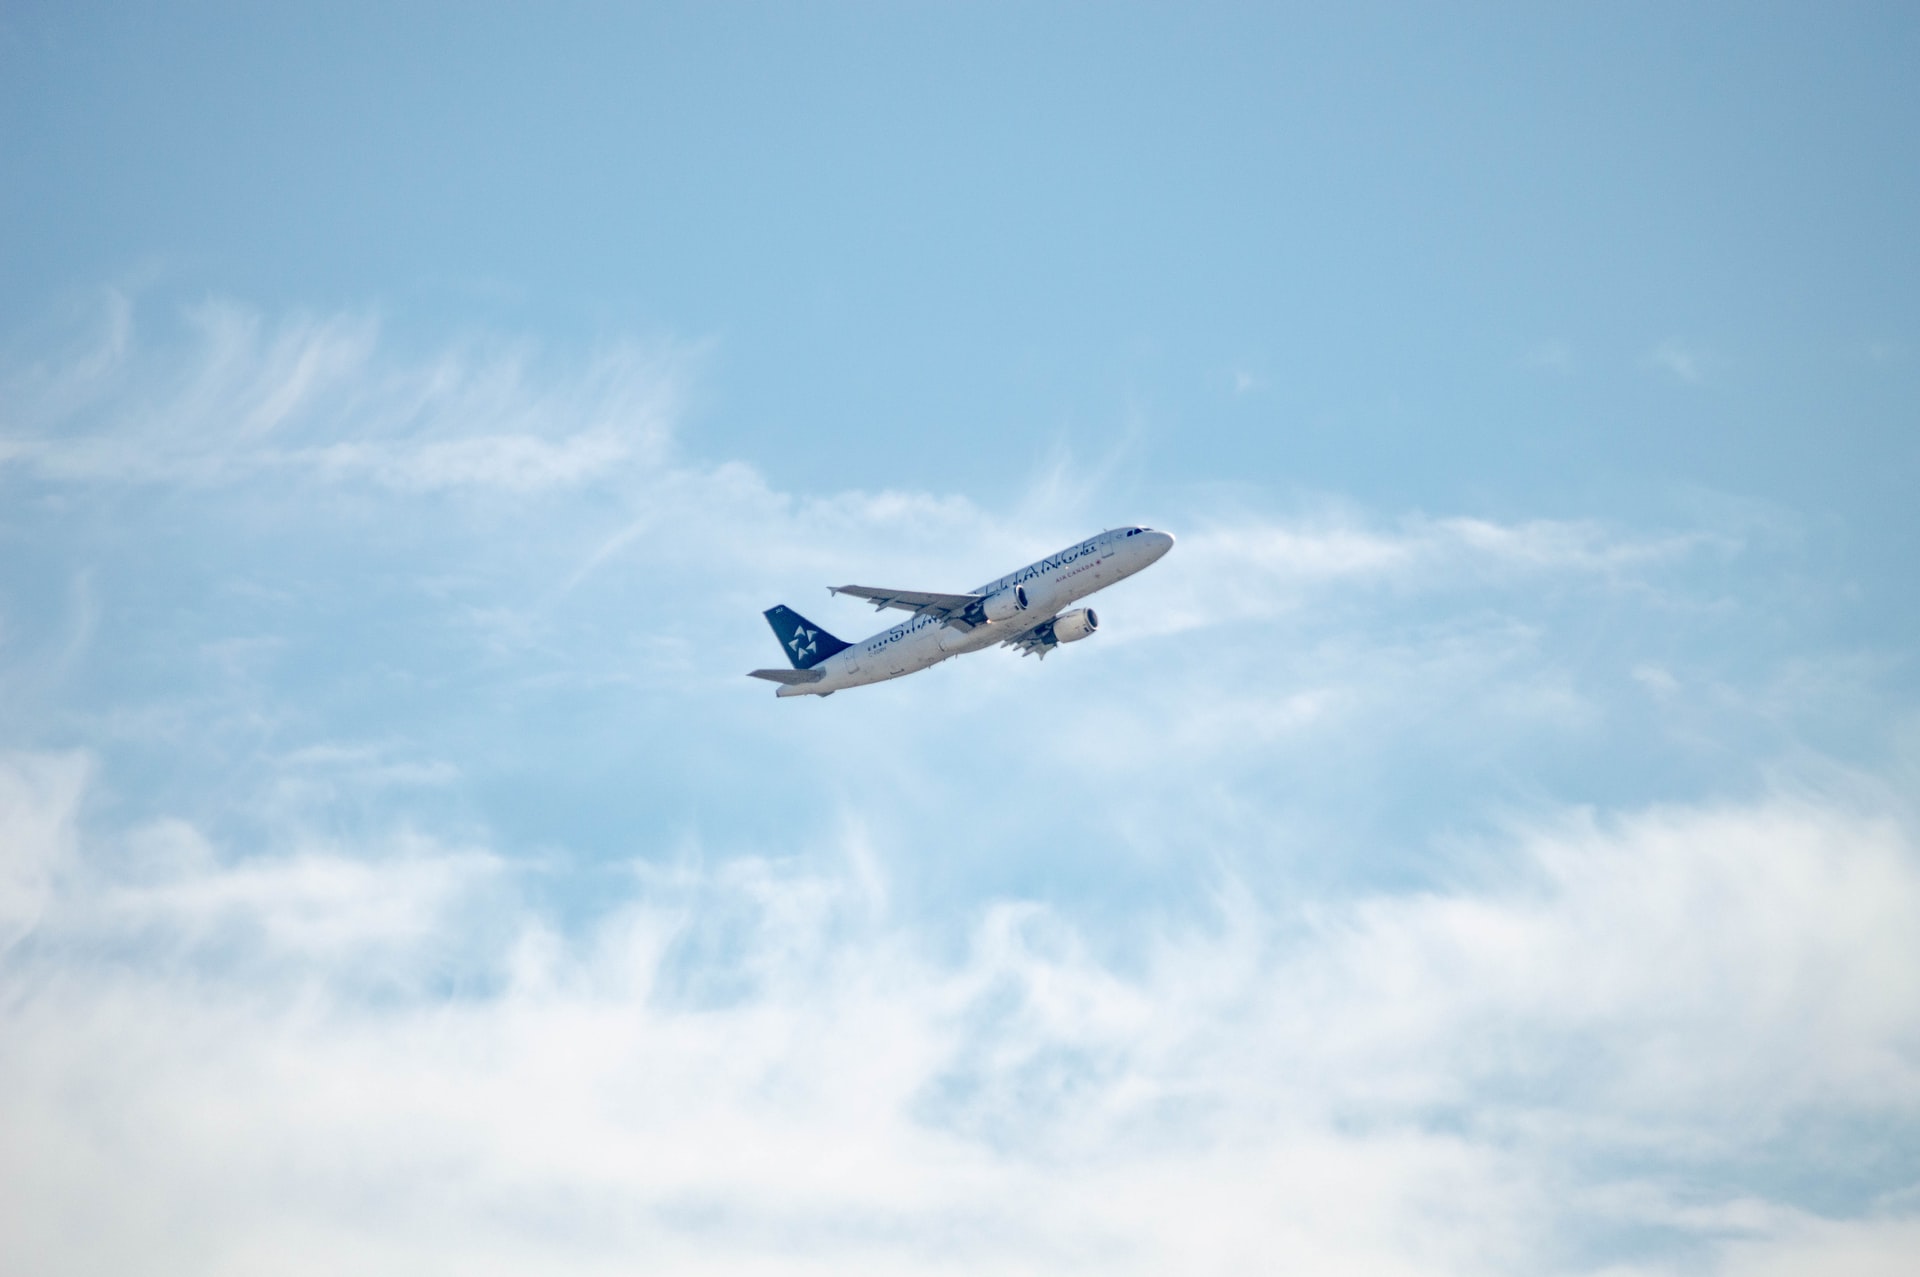 distant aircraft against a blue sky